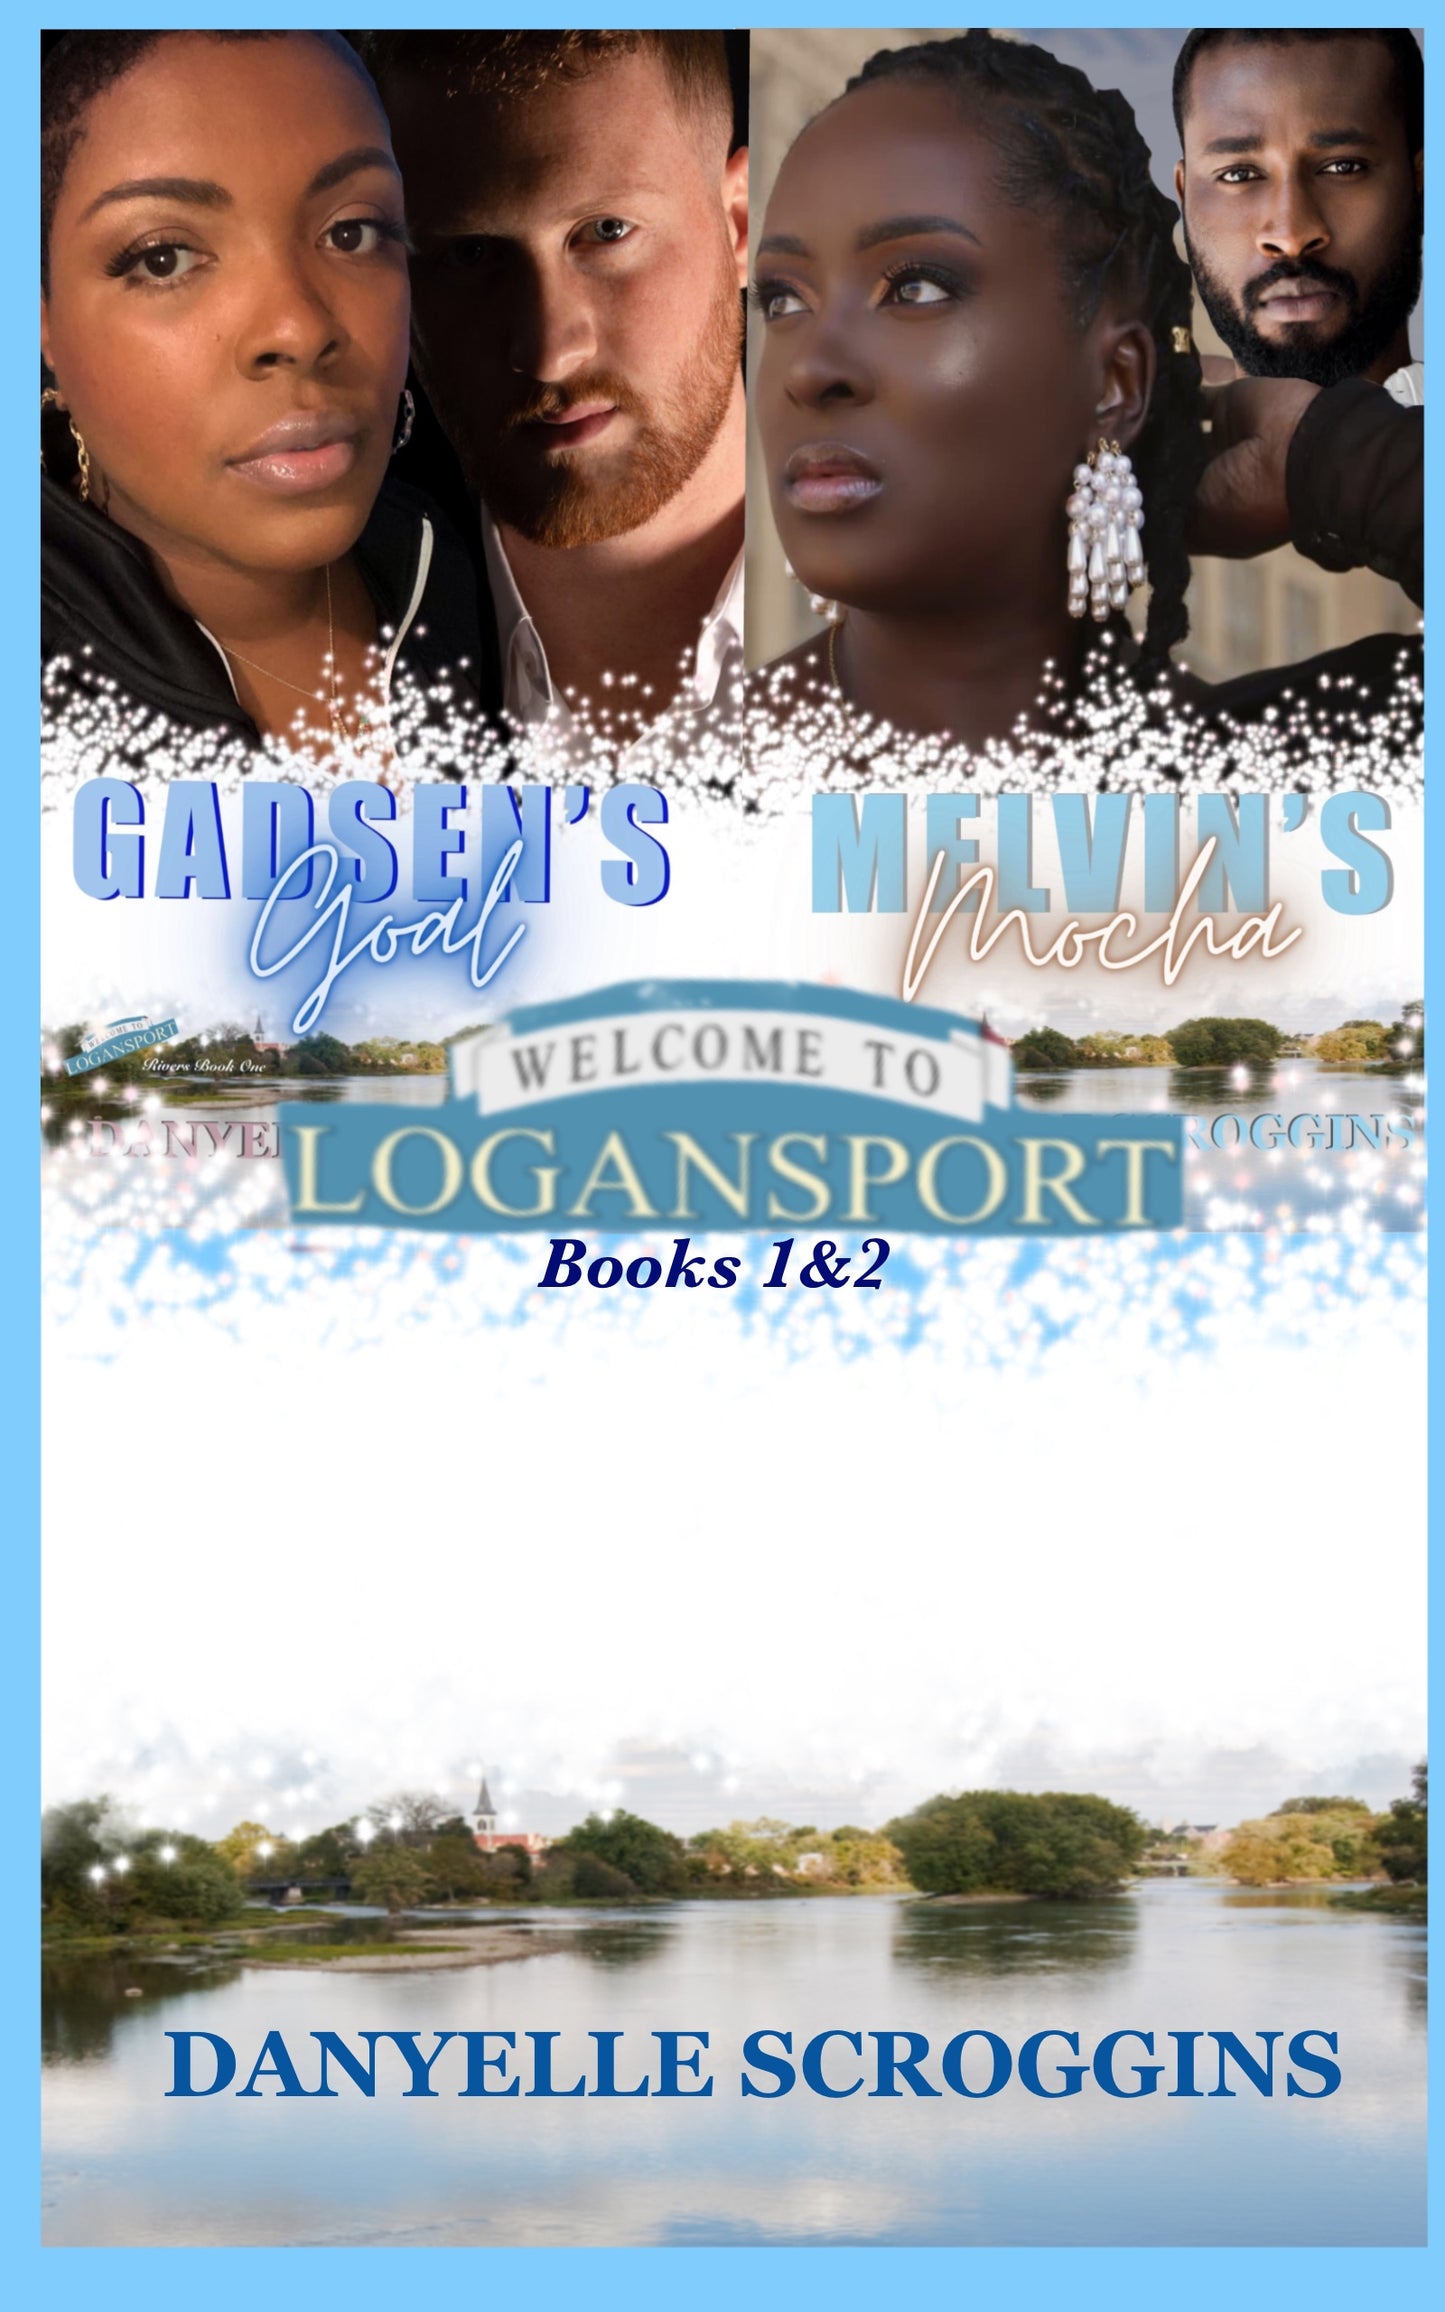 Logansport Rivers Book 1&2: Gadsen's Goal & Melvin's Mocha